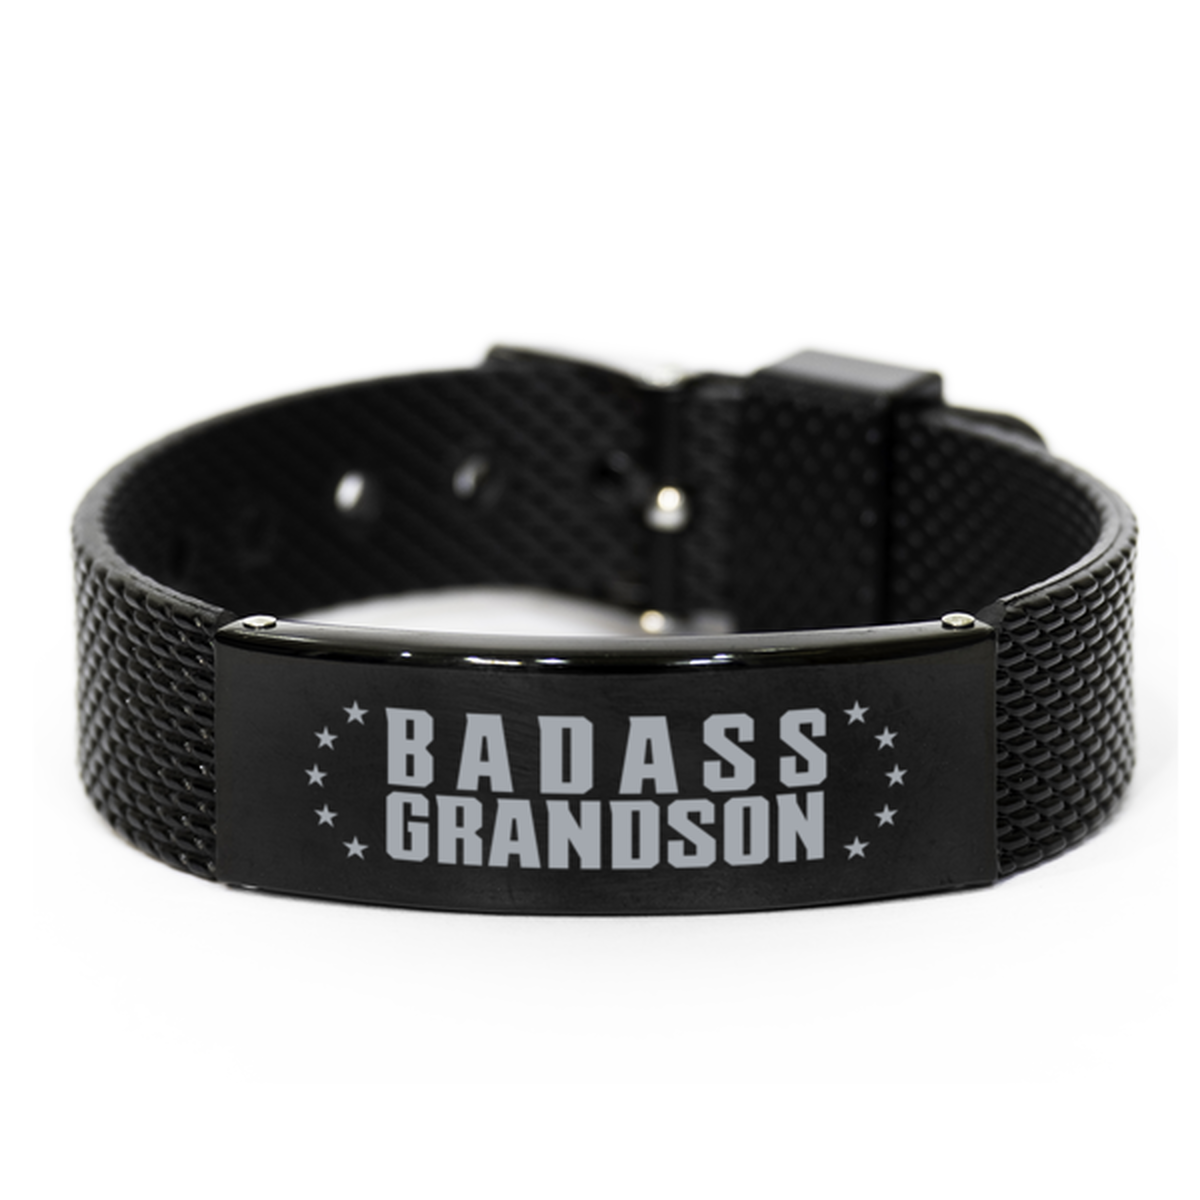 Grandson Black Shark Mesh Bracelet, Badass Grandson, Funny Family Gifts For Grandson From Grandfather Grandmother